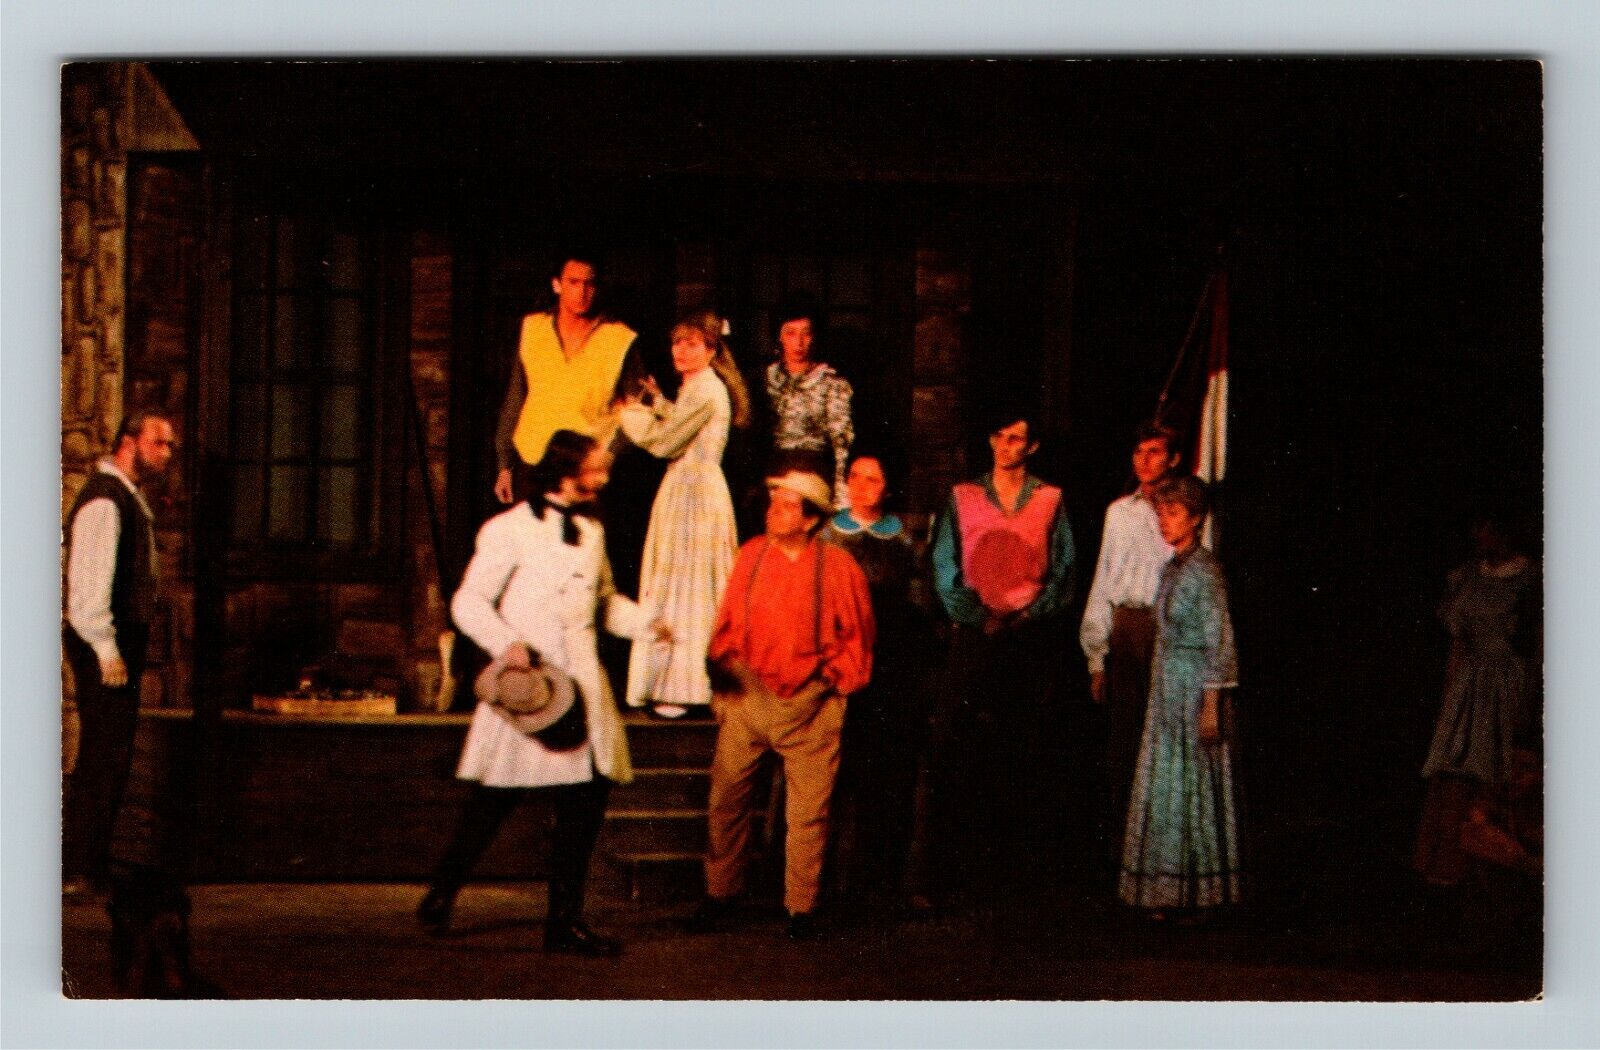 Beckley WV-West Virginia, Cliffside Theater Production, Actors Vintage Postcard